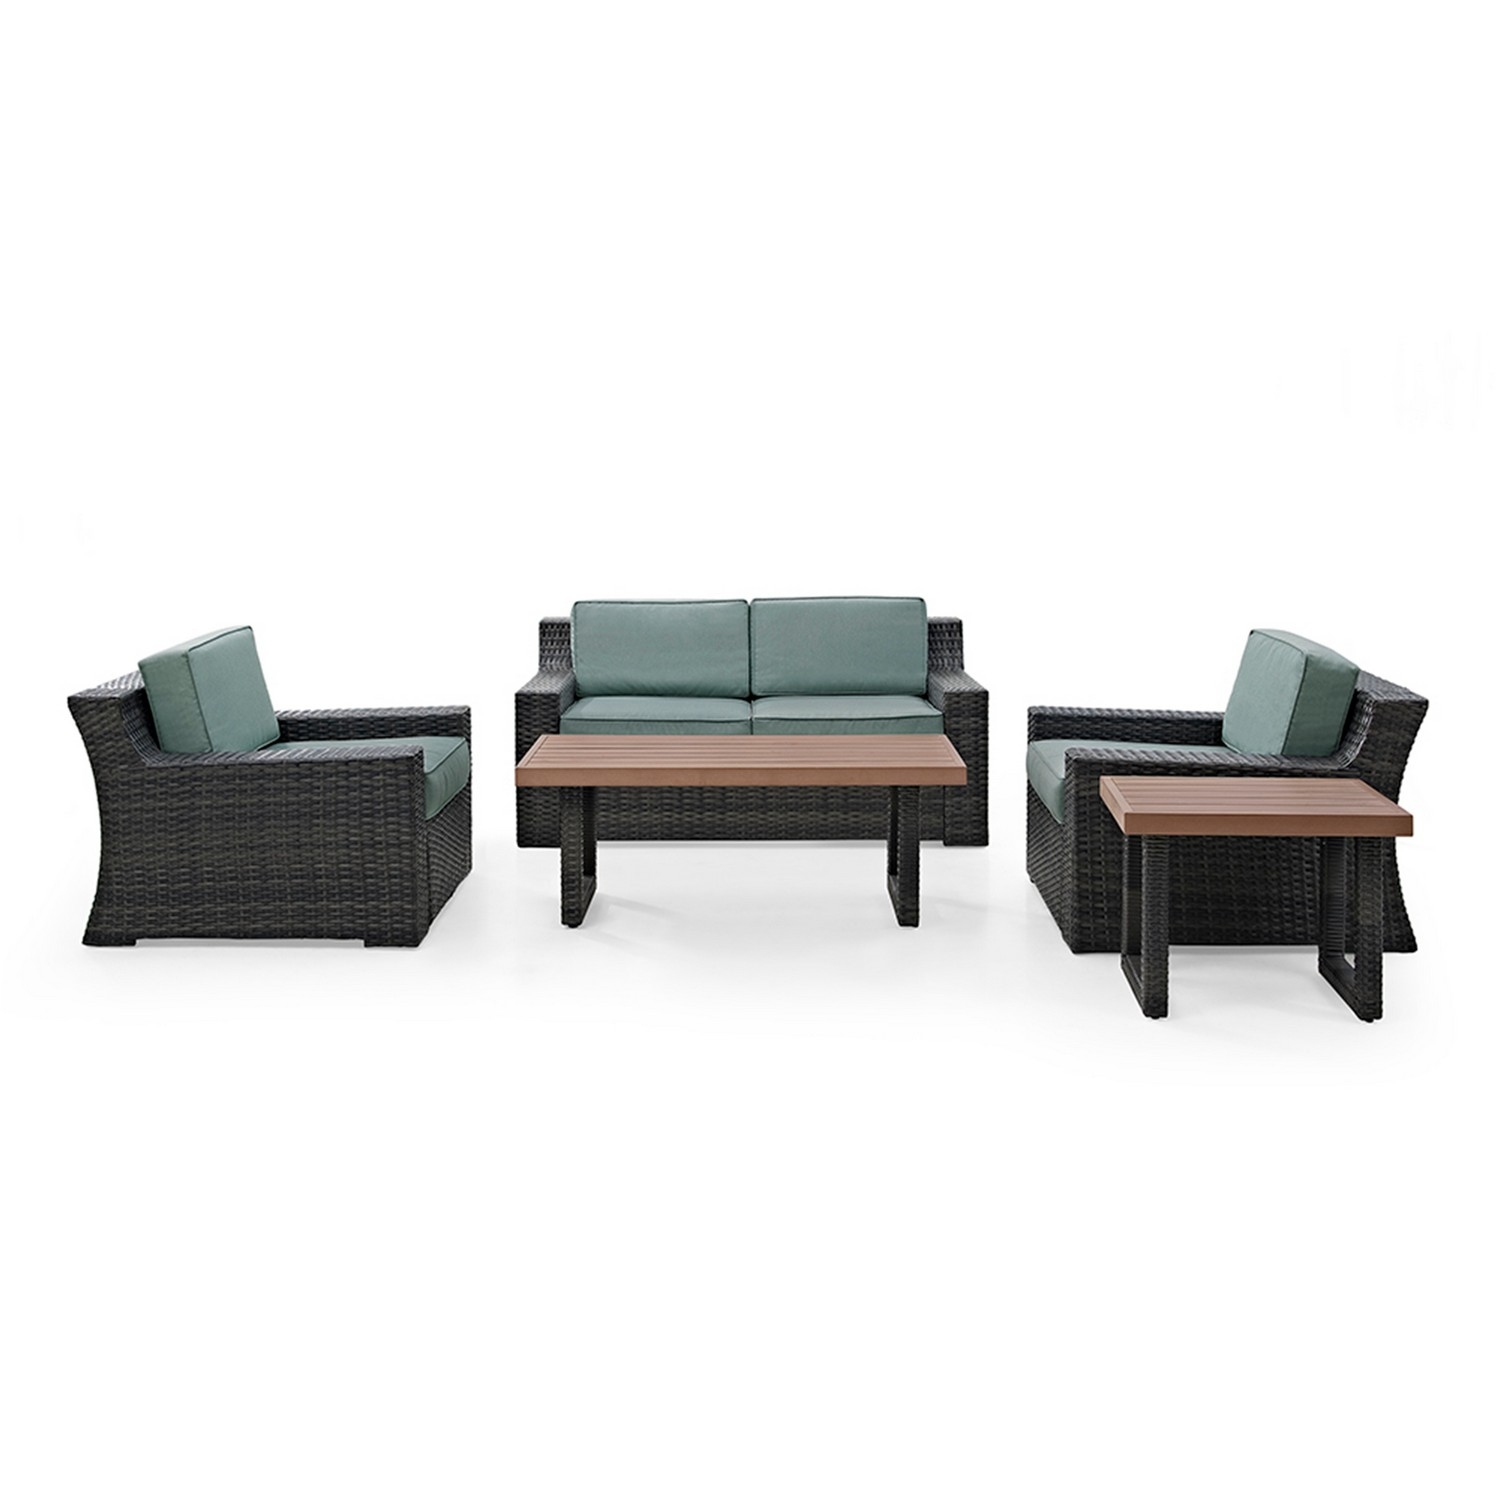 Crosley Beaufort 5-PC Outdoor Wicker Conversation Set - Loveseat, 2 Chairs, Coffee Table, Side Table - Mist/Brown